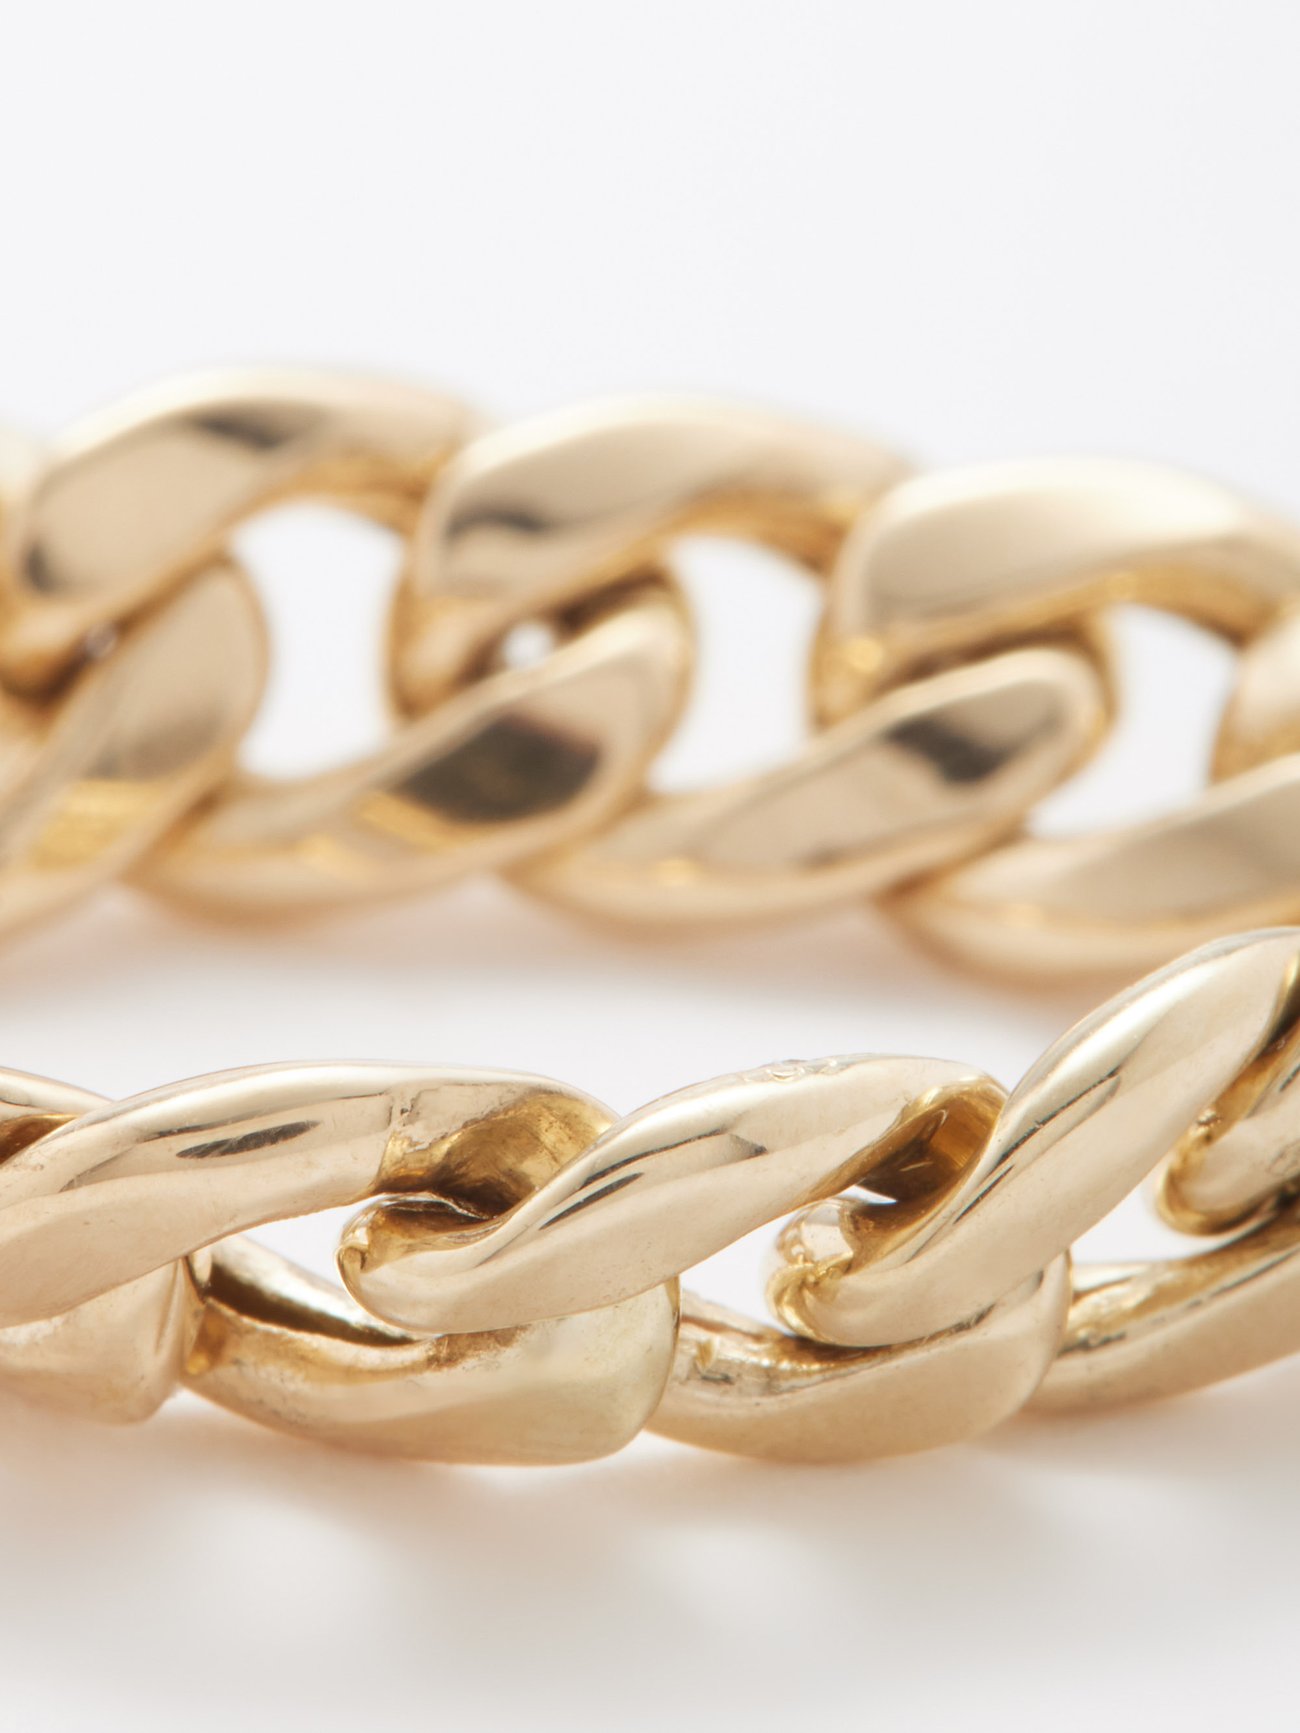 Zoë Chicco Women's 14K Yellow Gold & Diamond Chain Ring - Gold - Size 7